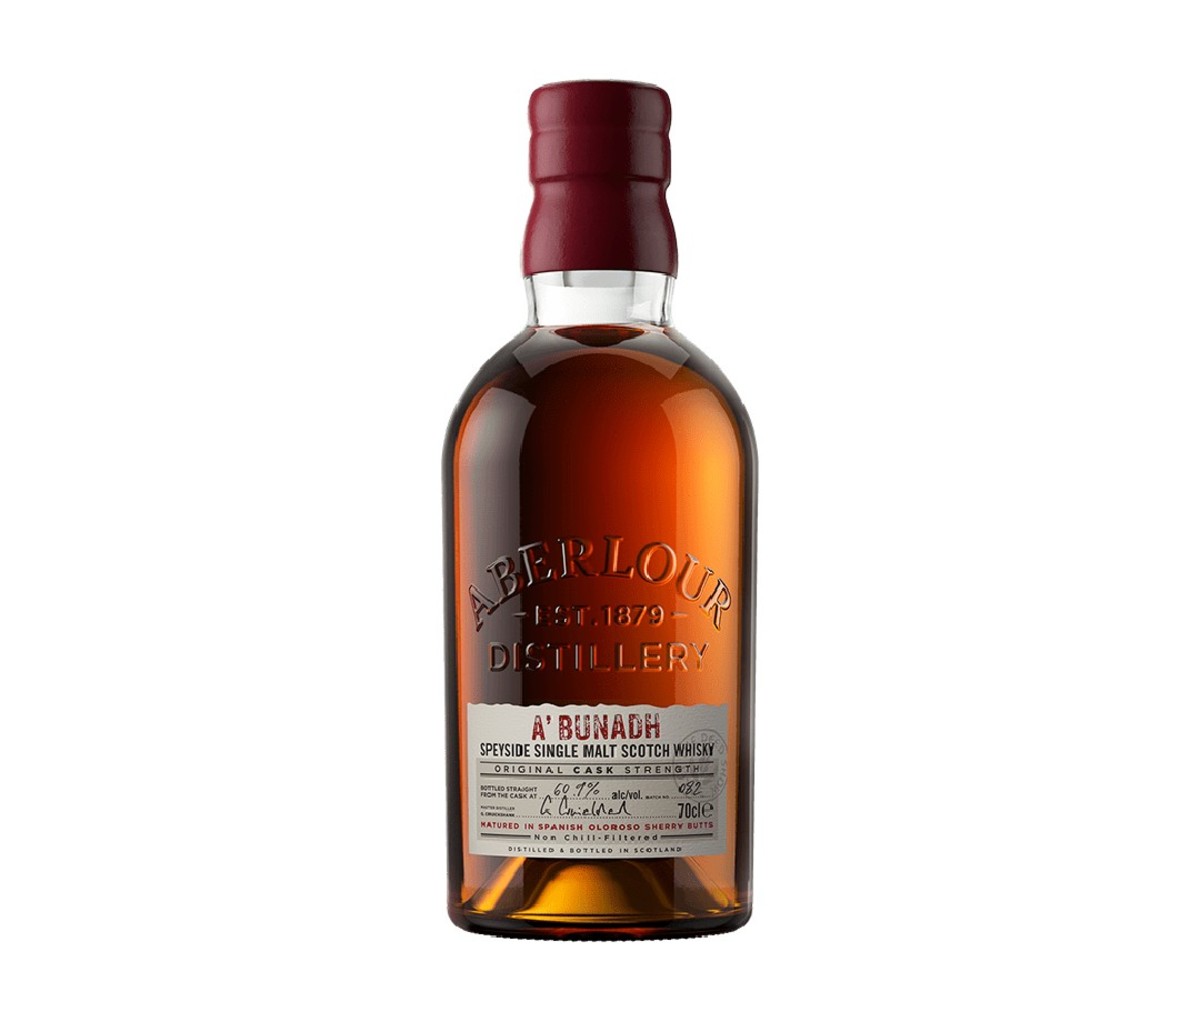 A bottle of Aberlour A’bunadh Single Malt Scotch Whisky.